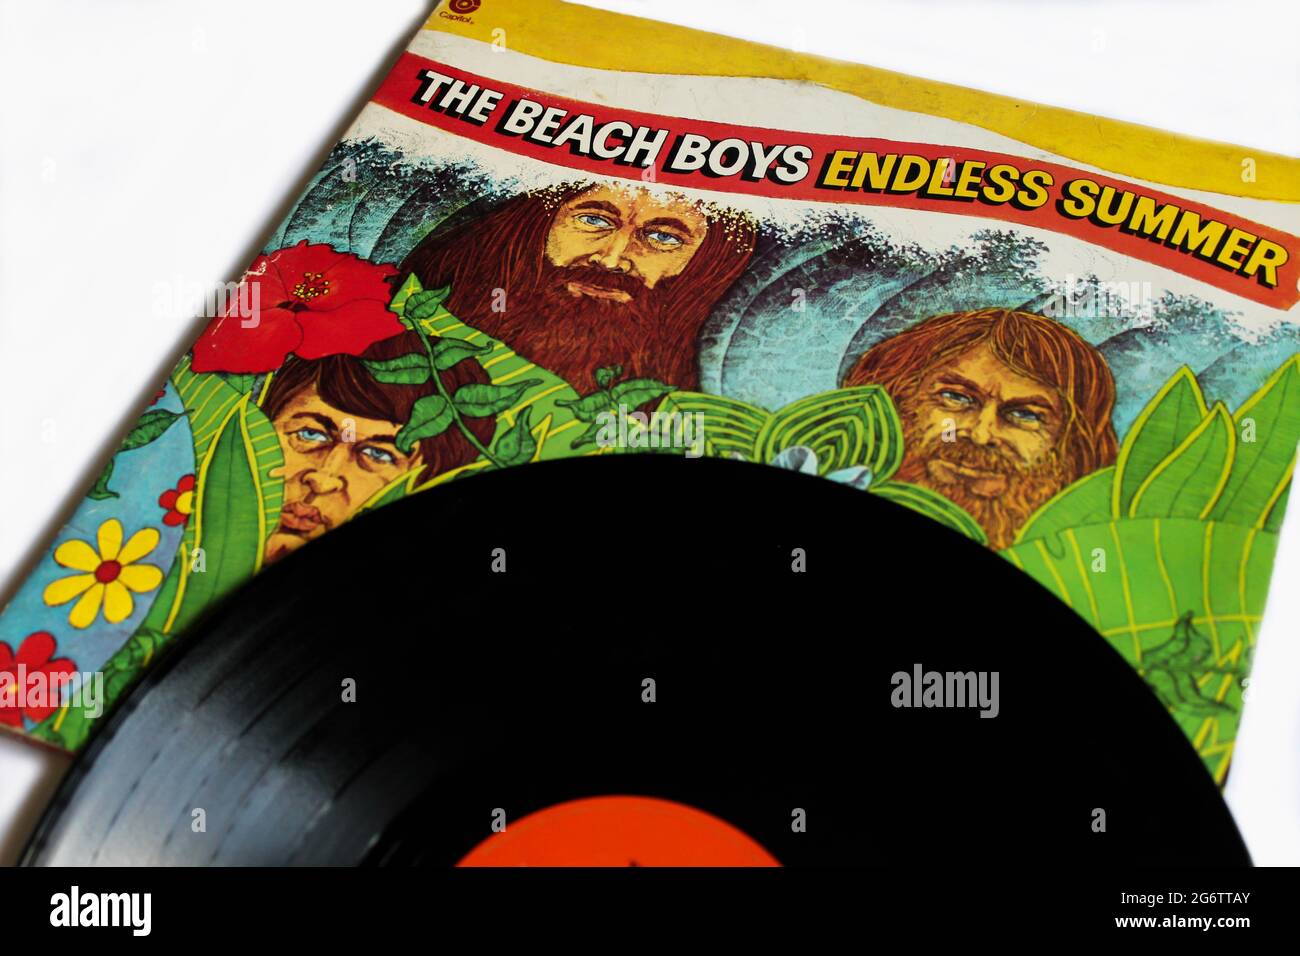 Classic rock band, The Beach Boys music album on vinyl record LP disc. Titled Endless Summer album cover Stock Photo